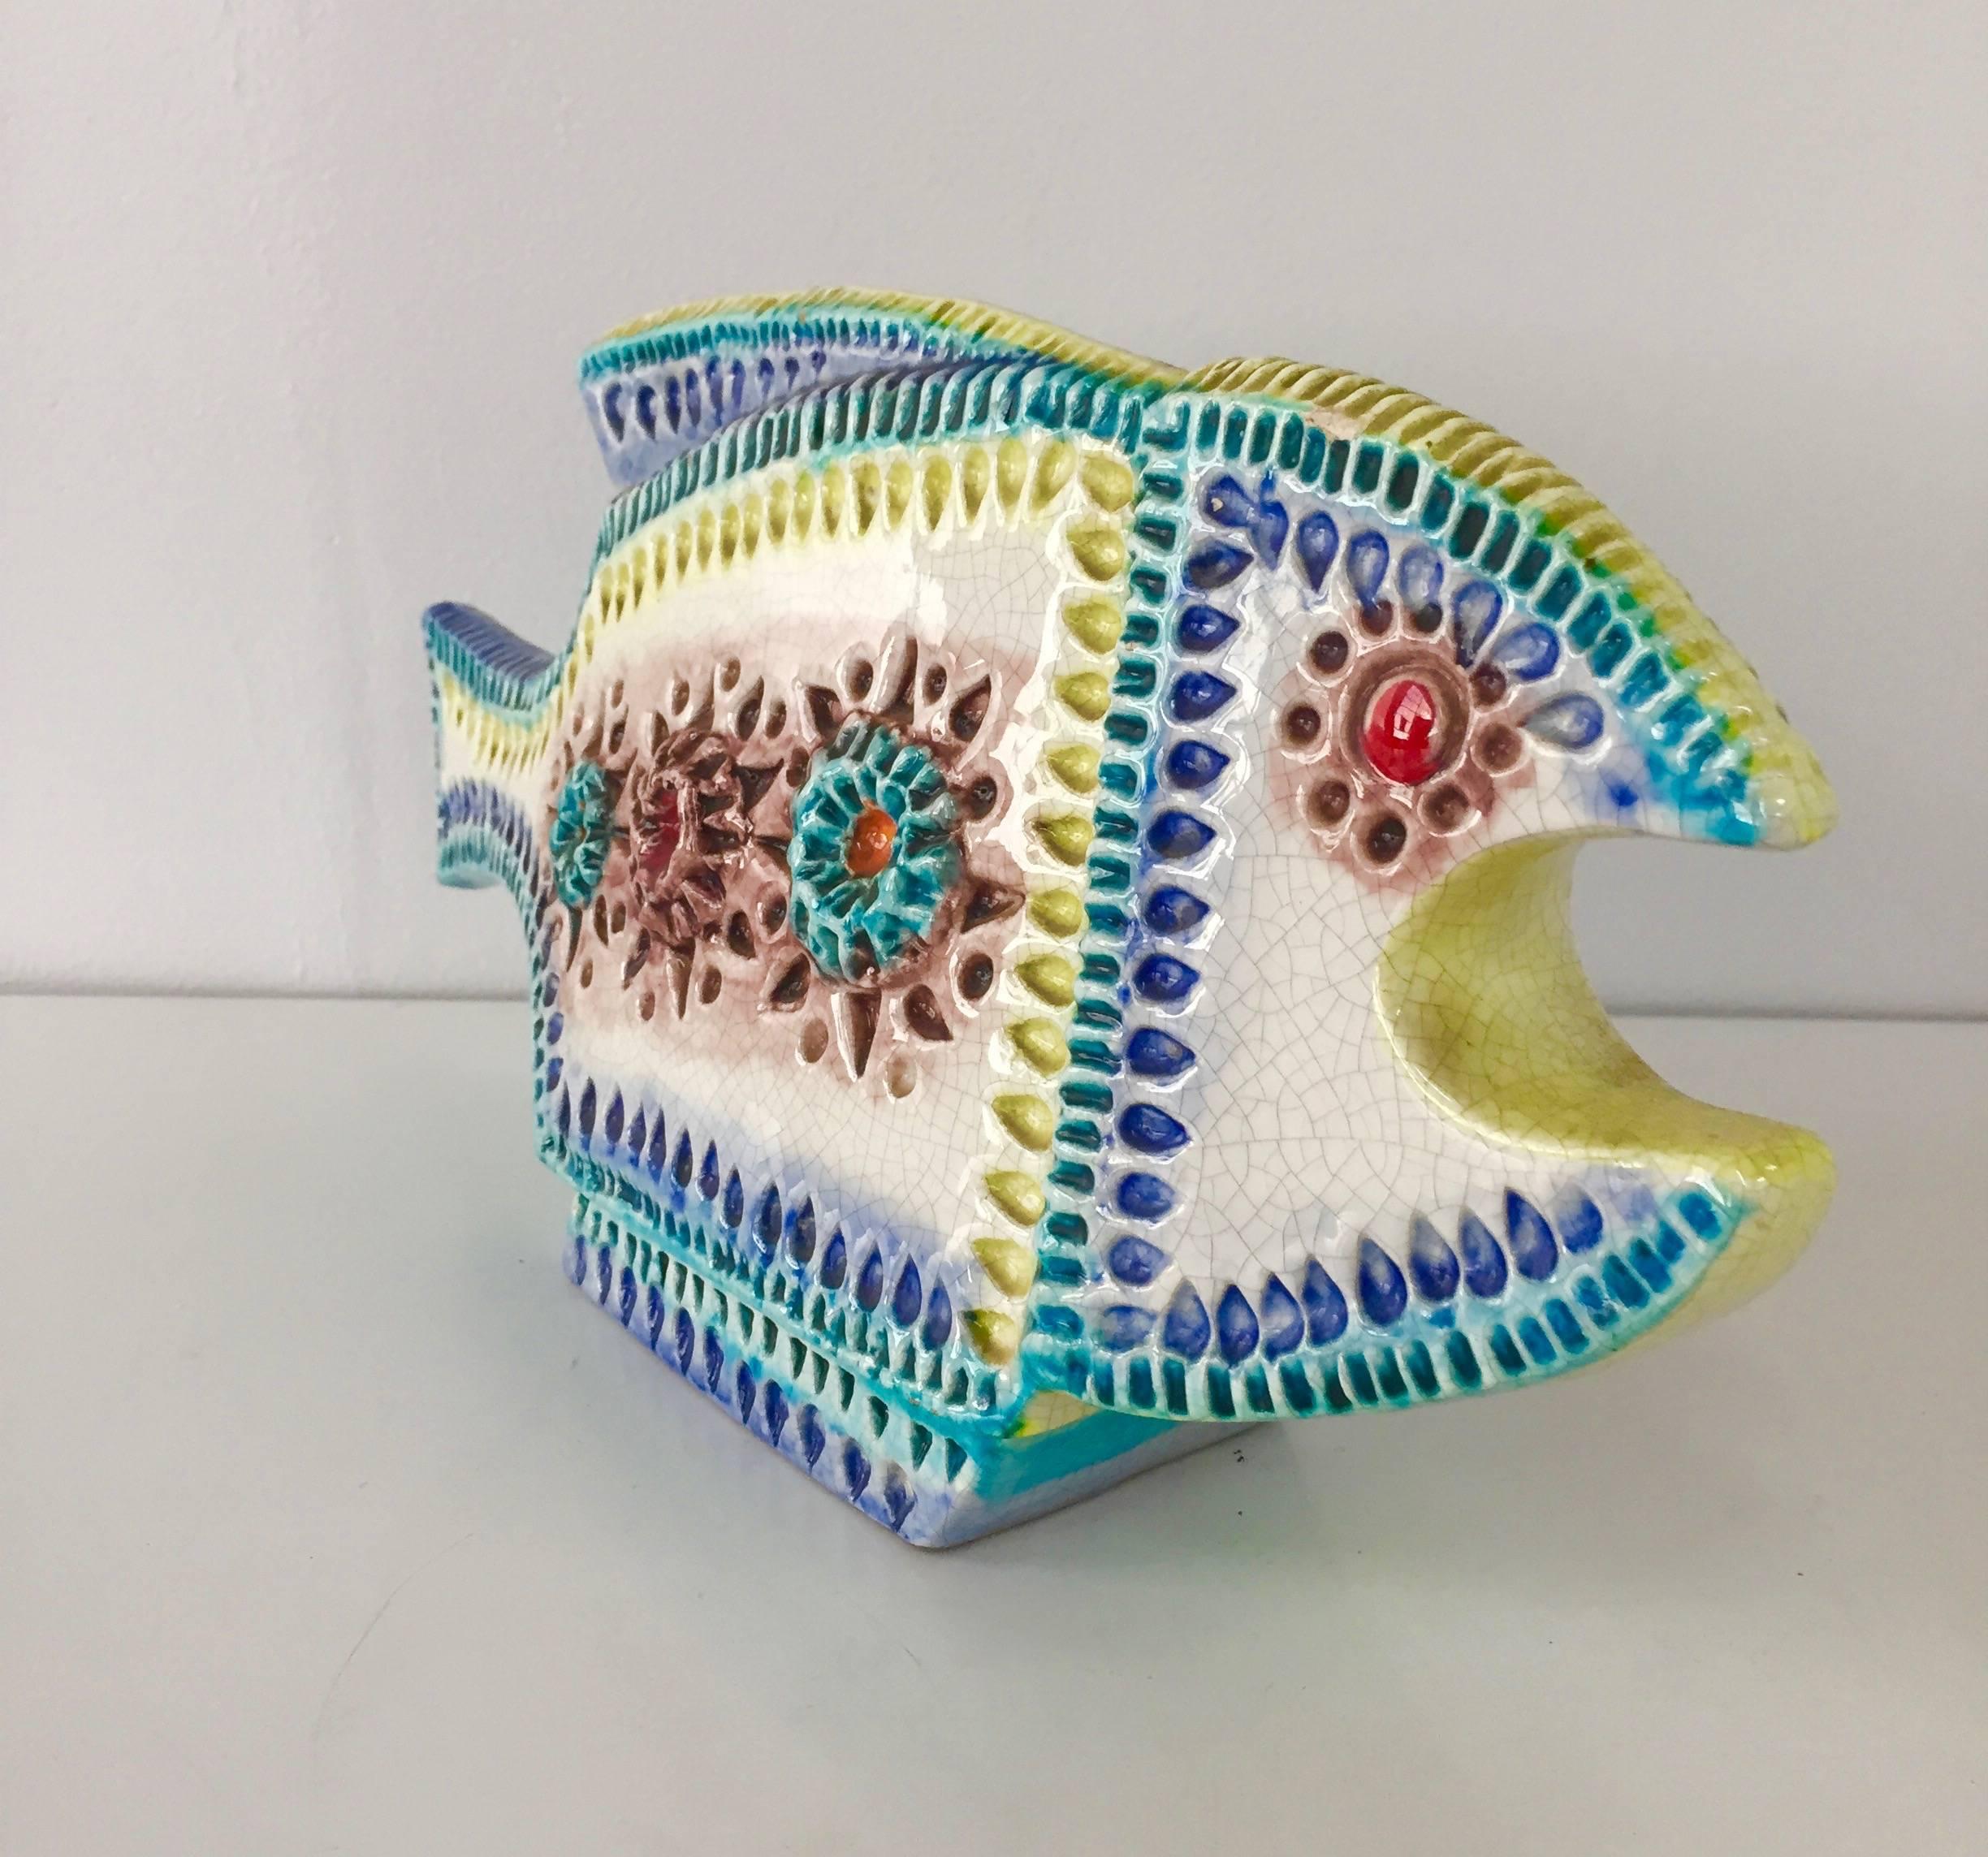 Ceramic Bitossi Fish by Aldo Londi 12 Inches Long